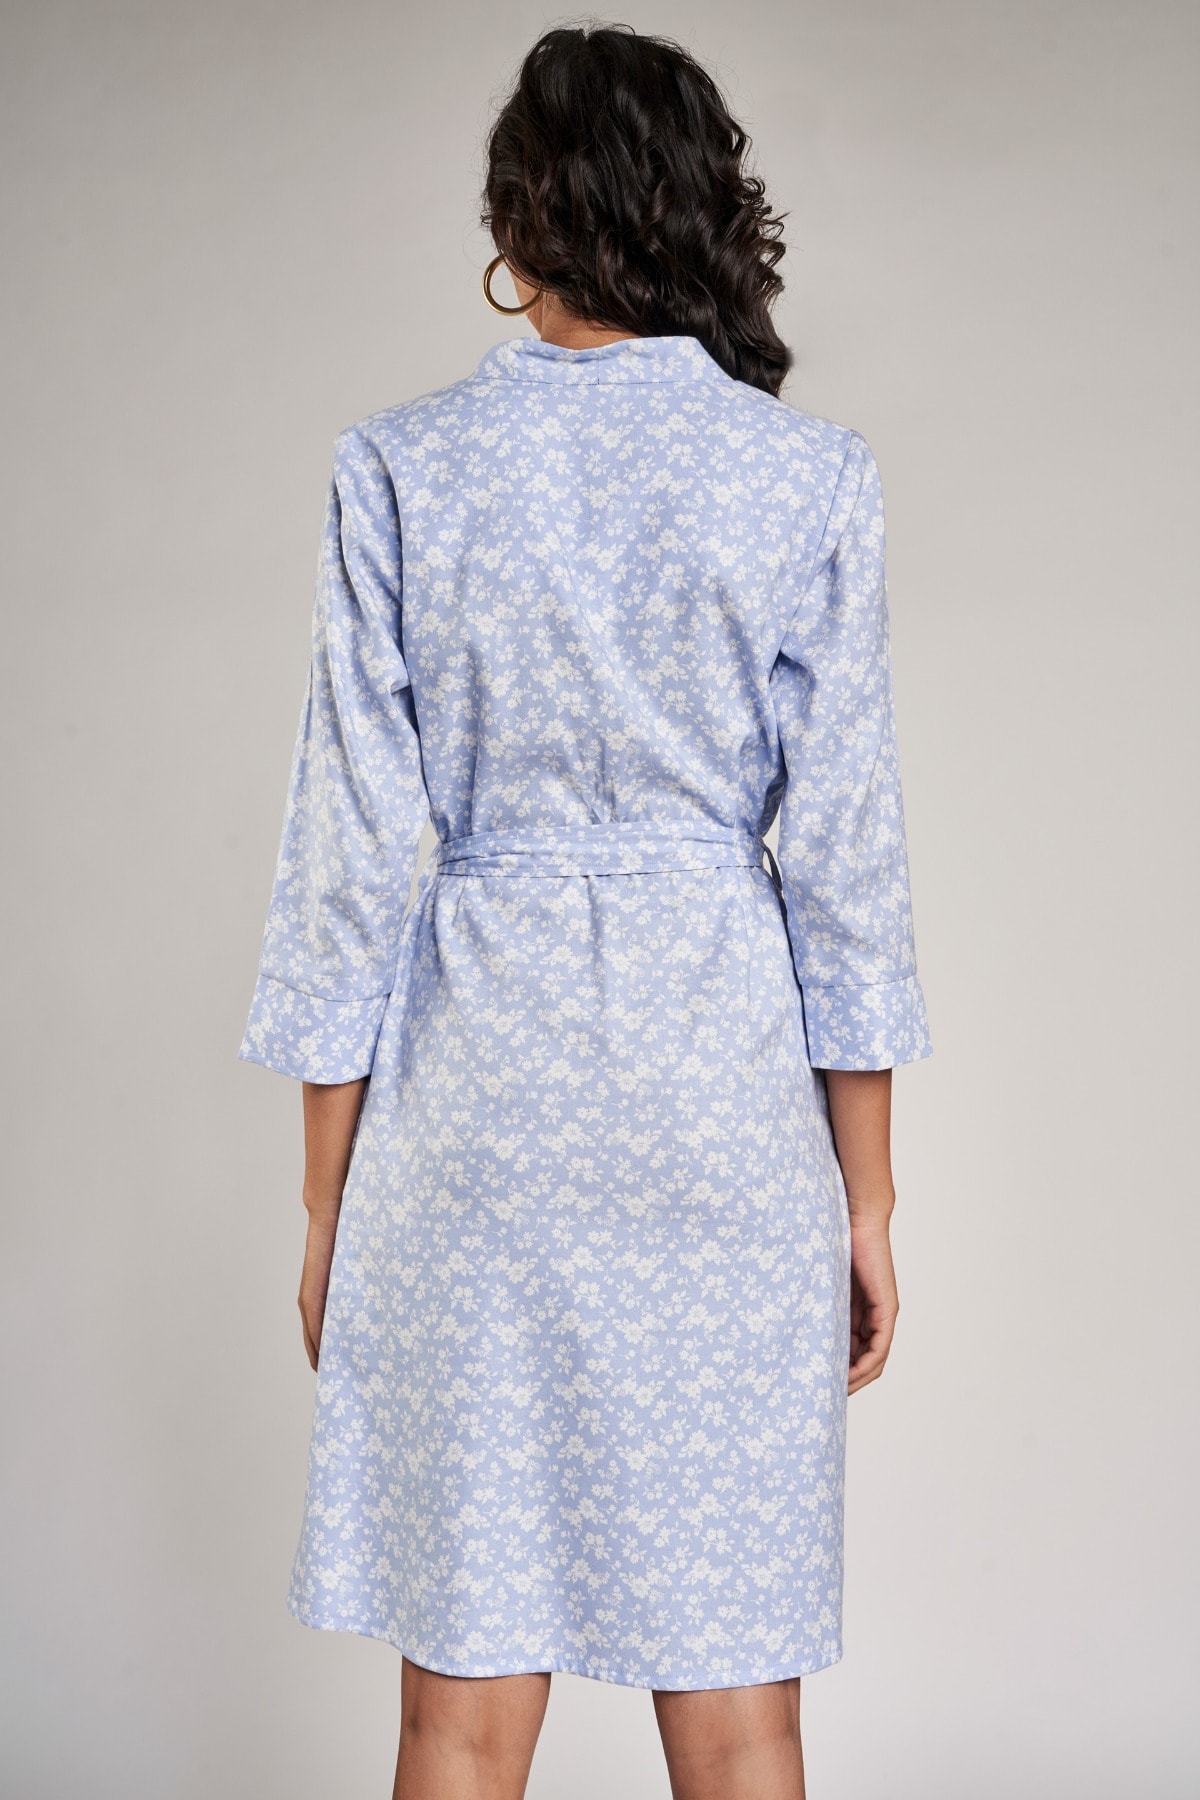 4 - Powder Blue Floral Printed Shift Dress, image 4